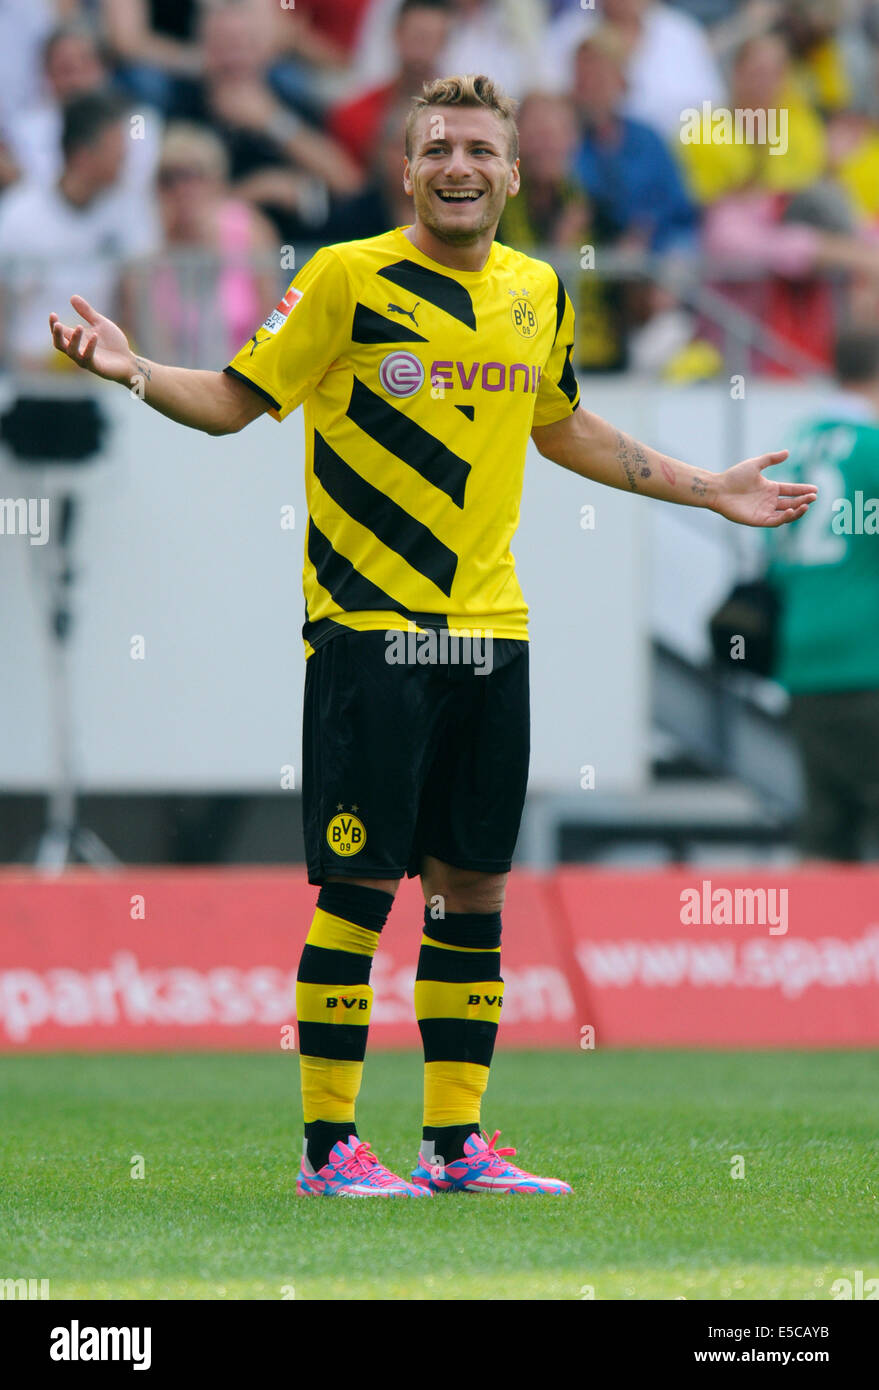 Fussball, Bundesliga, Deutschland, Herren, Saison 2014/2015, Friendly match, Stadion Essen: Rot-Weiss Essen - Bor. Dortmund, BVB; Italian player Ciro Immobile (BVB). Stock Photo